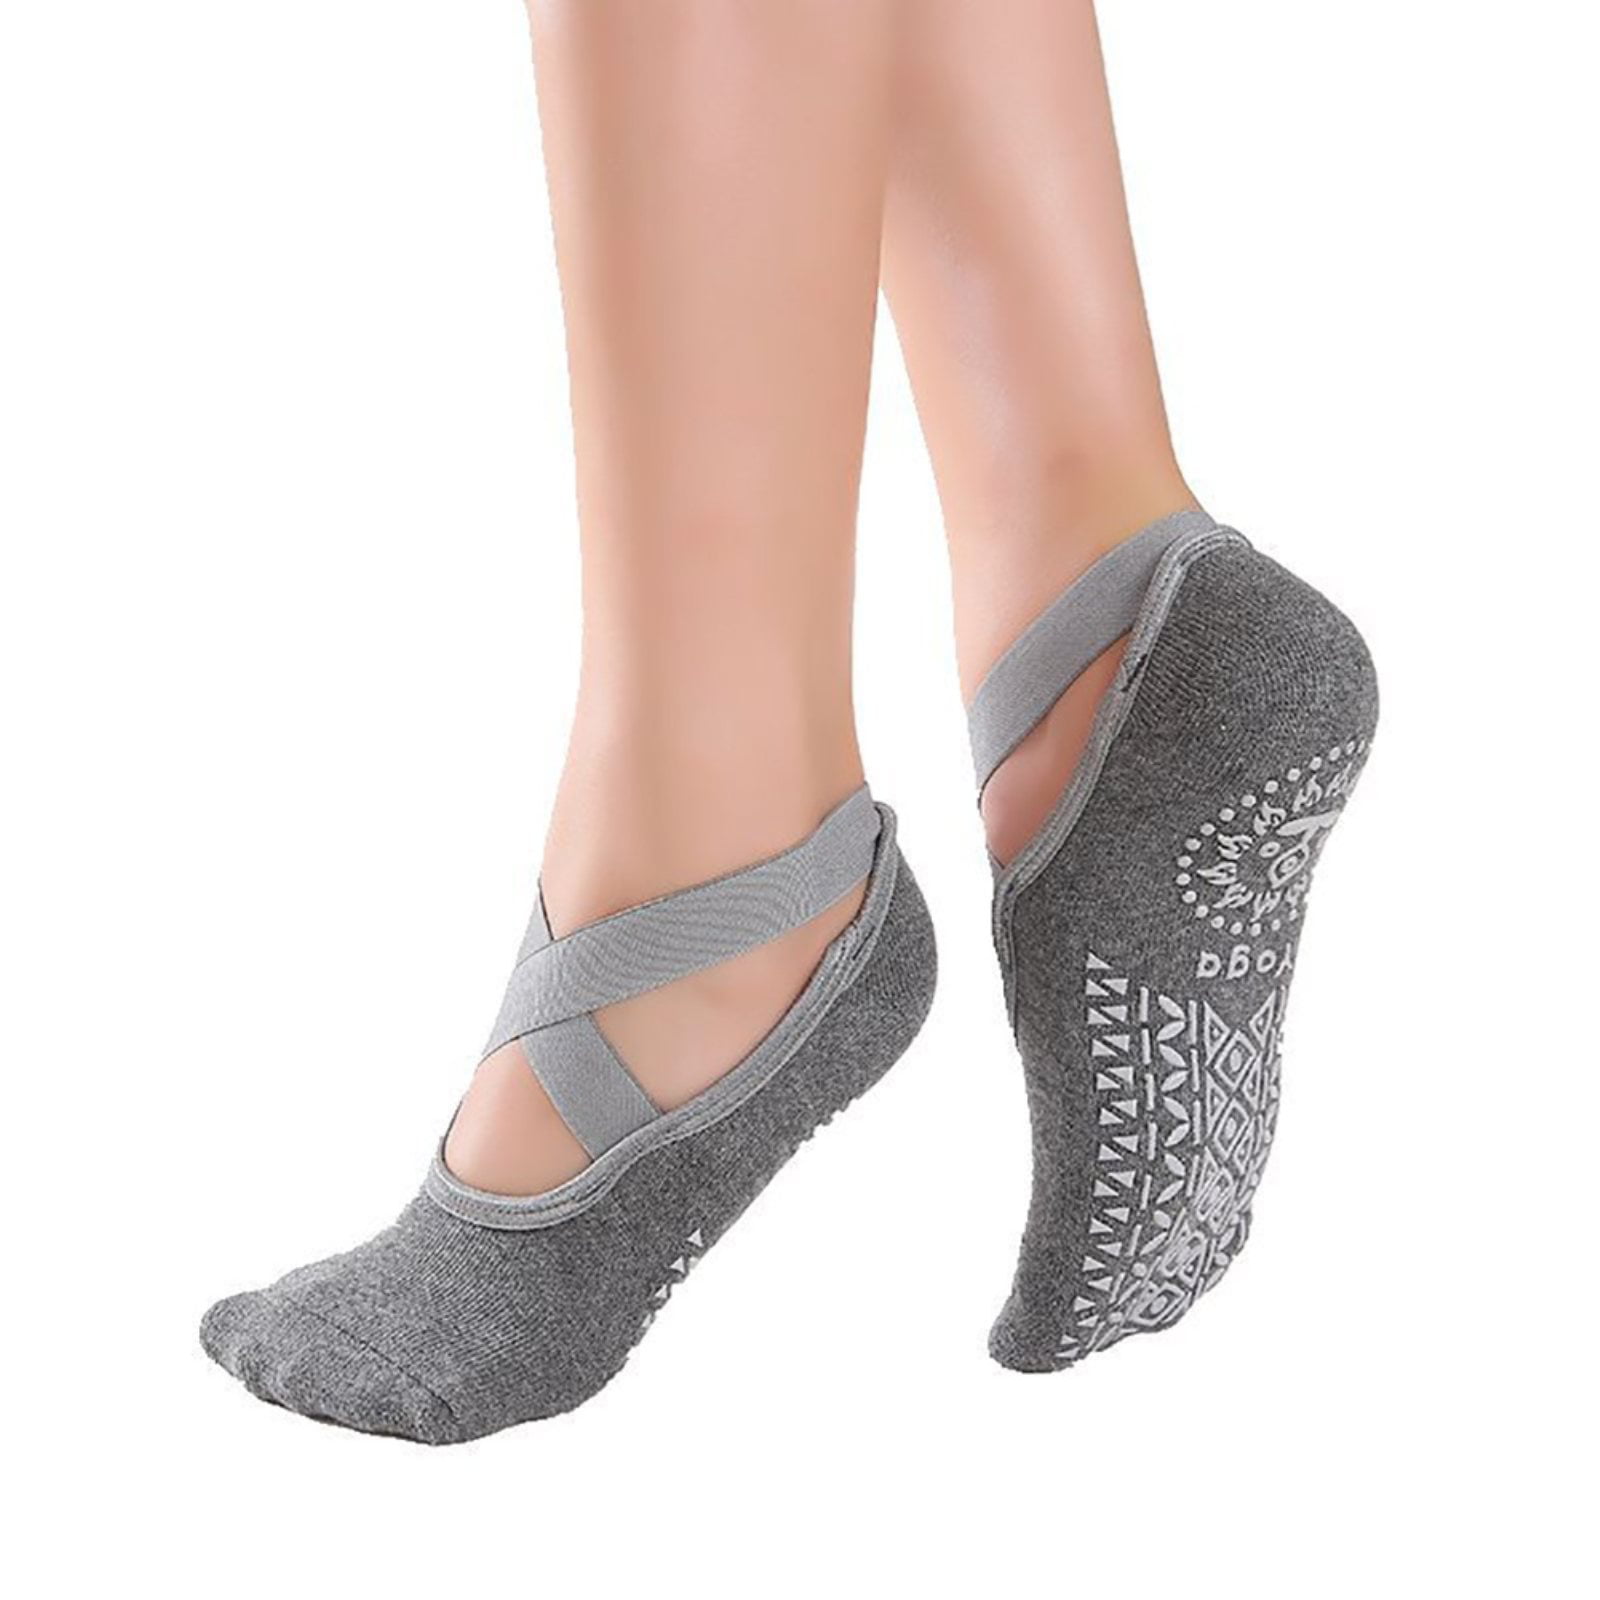 1Pair Ladies Anti Slip Cotton Yoga Socks Bandage Sports Girls Ballet Dance Socks 